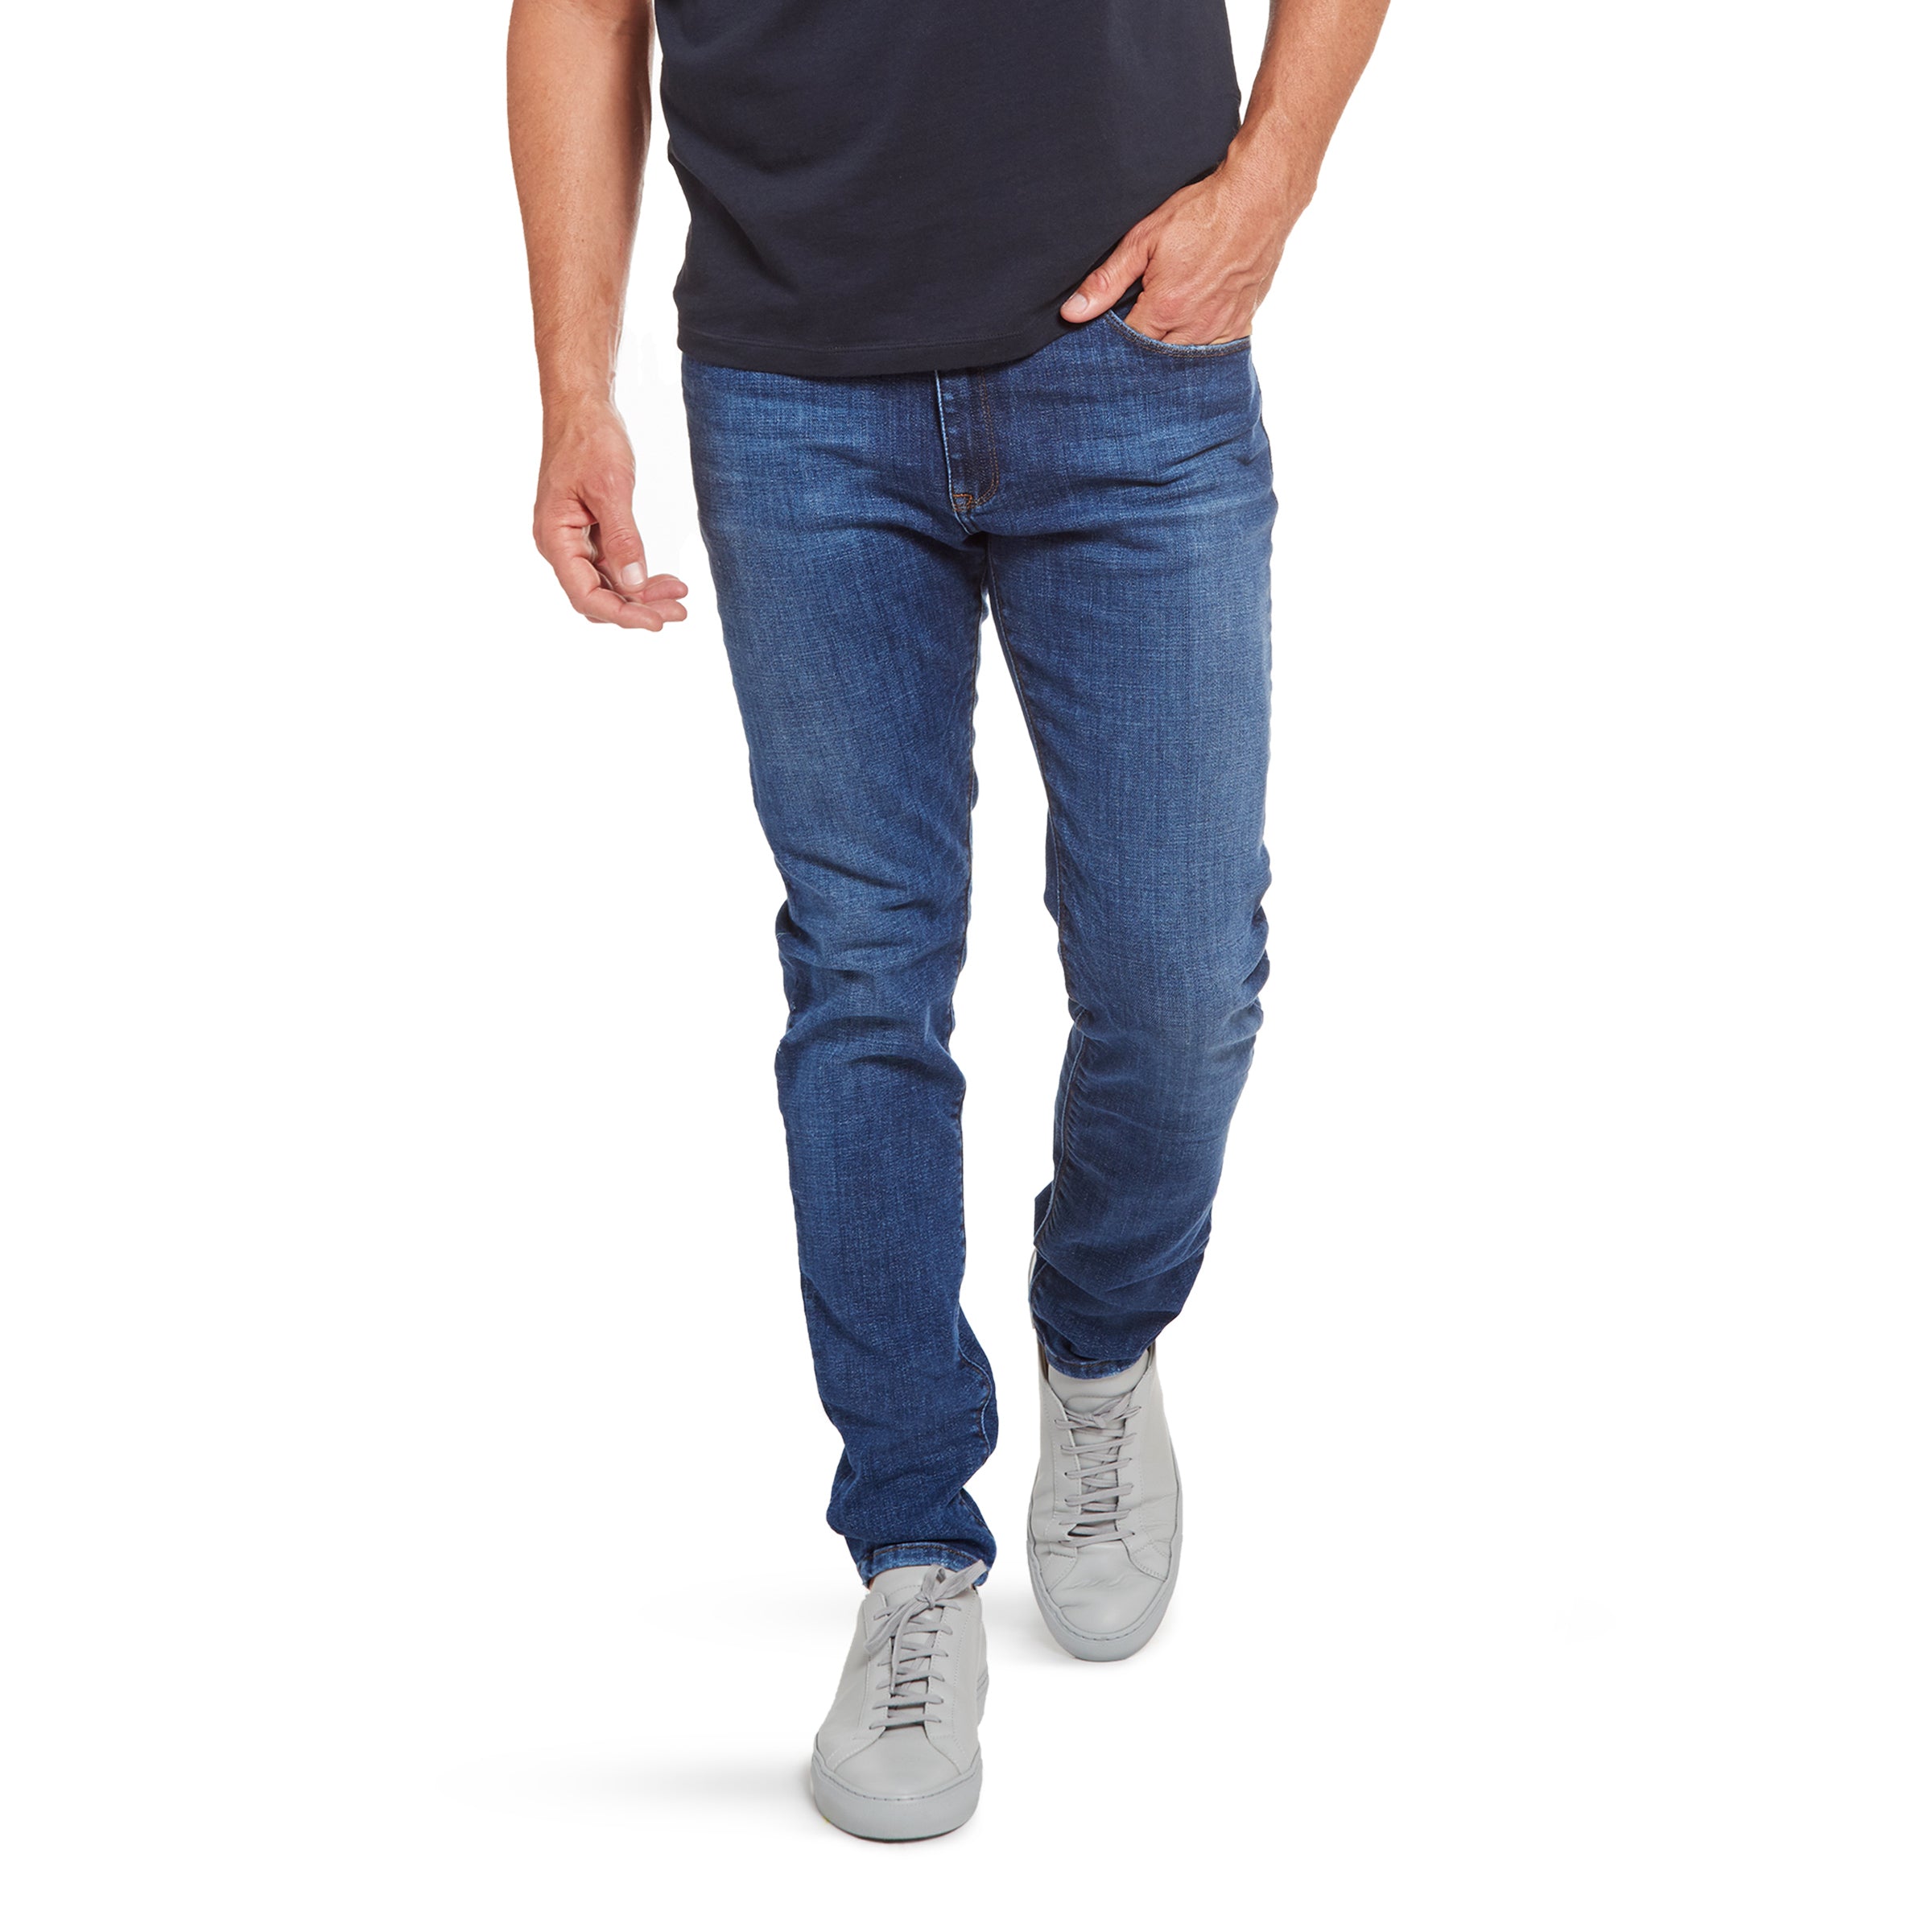 Men wearing Azul medio/claro Skinny Wooster Jeans